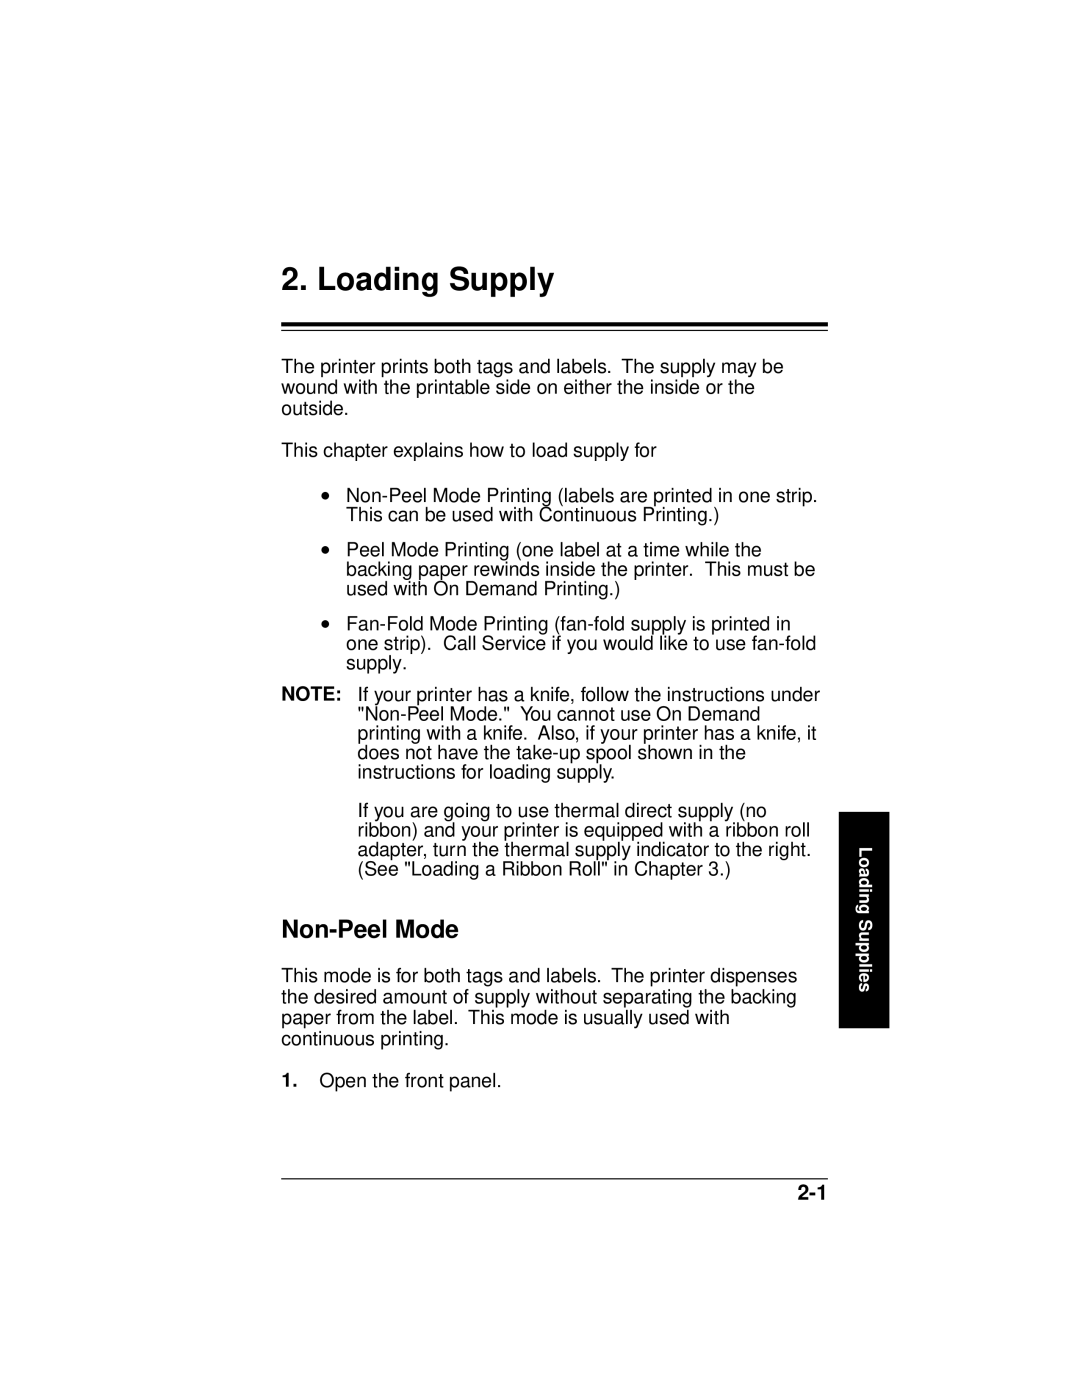 Paxar 9445 manual Loading Supply, Non-Peel Mode 